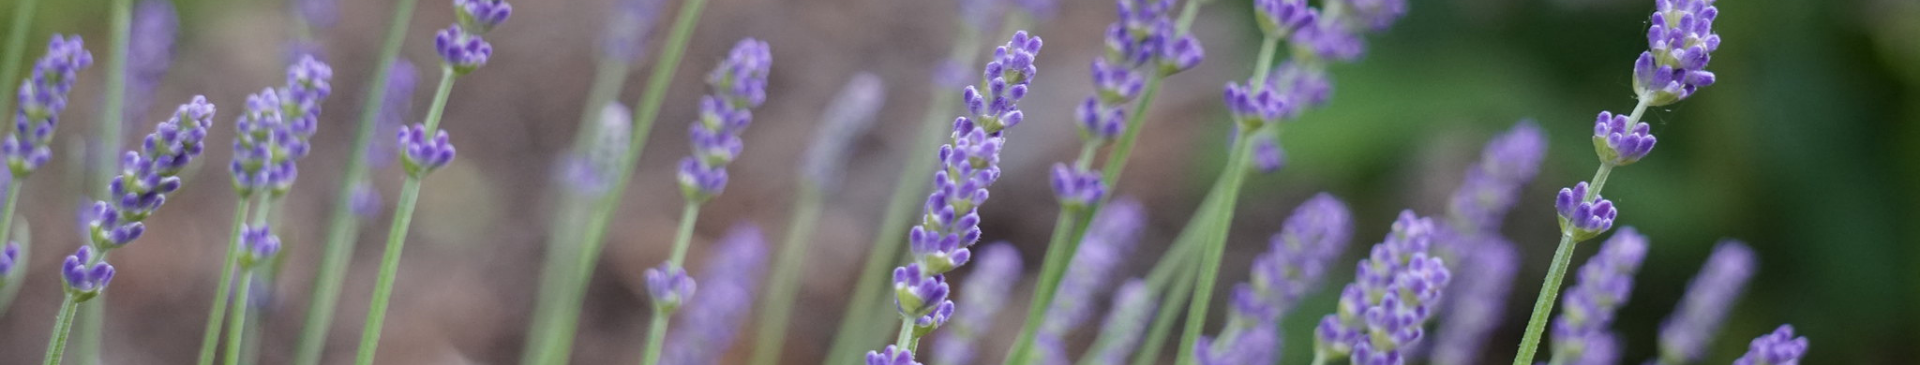 tiny purple flowers on green stems